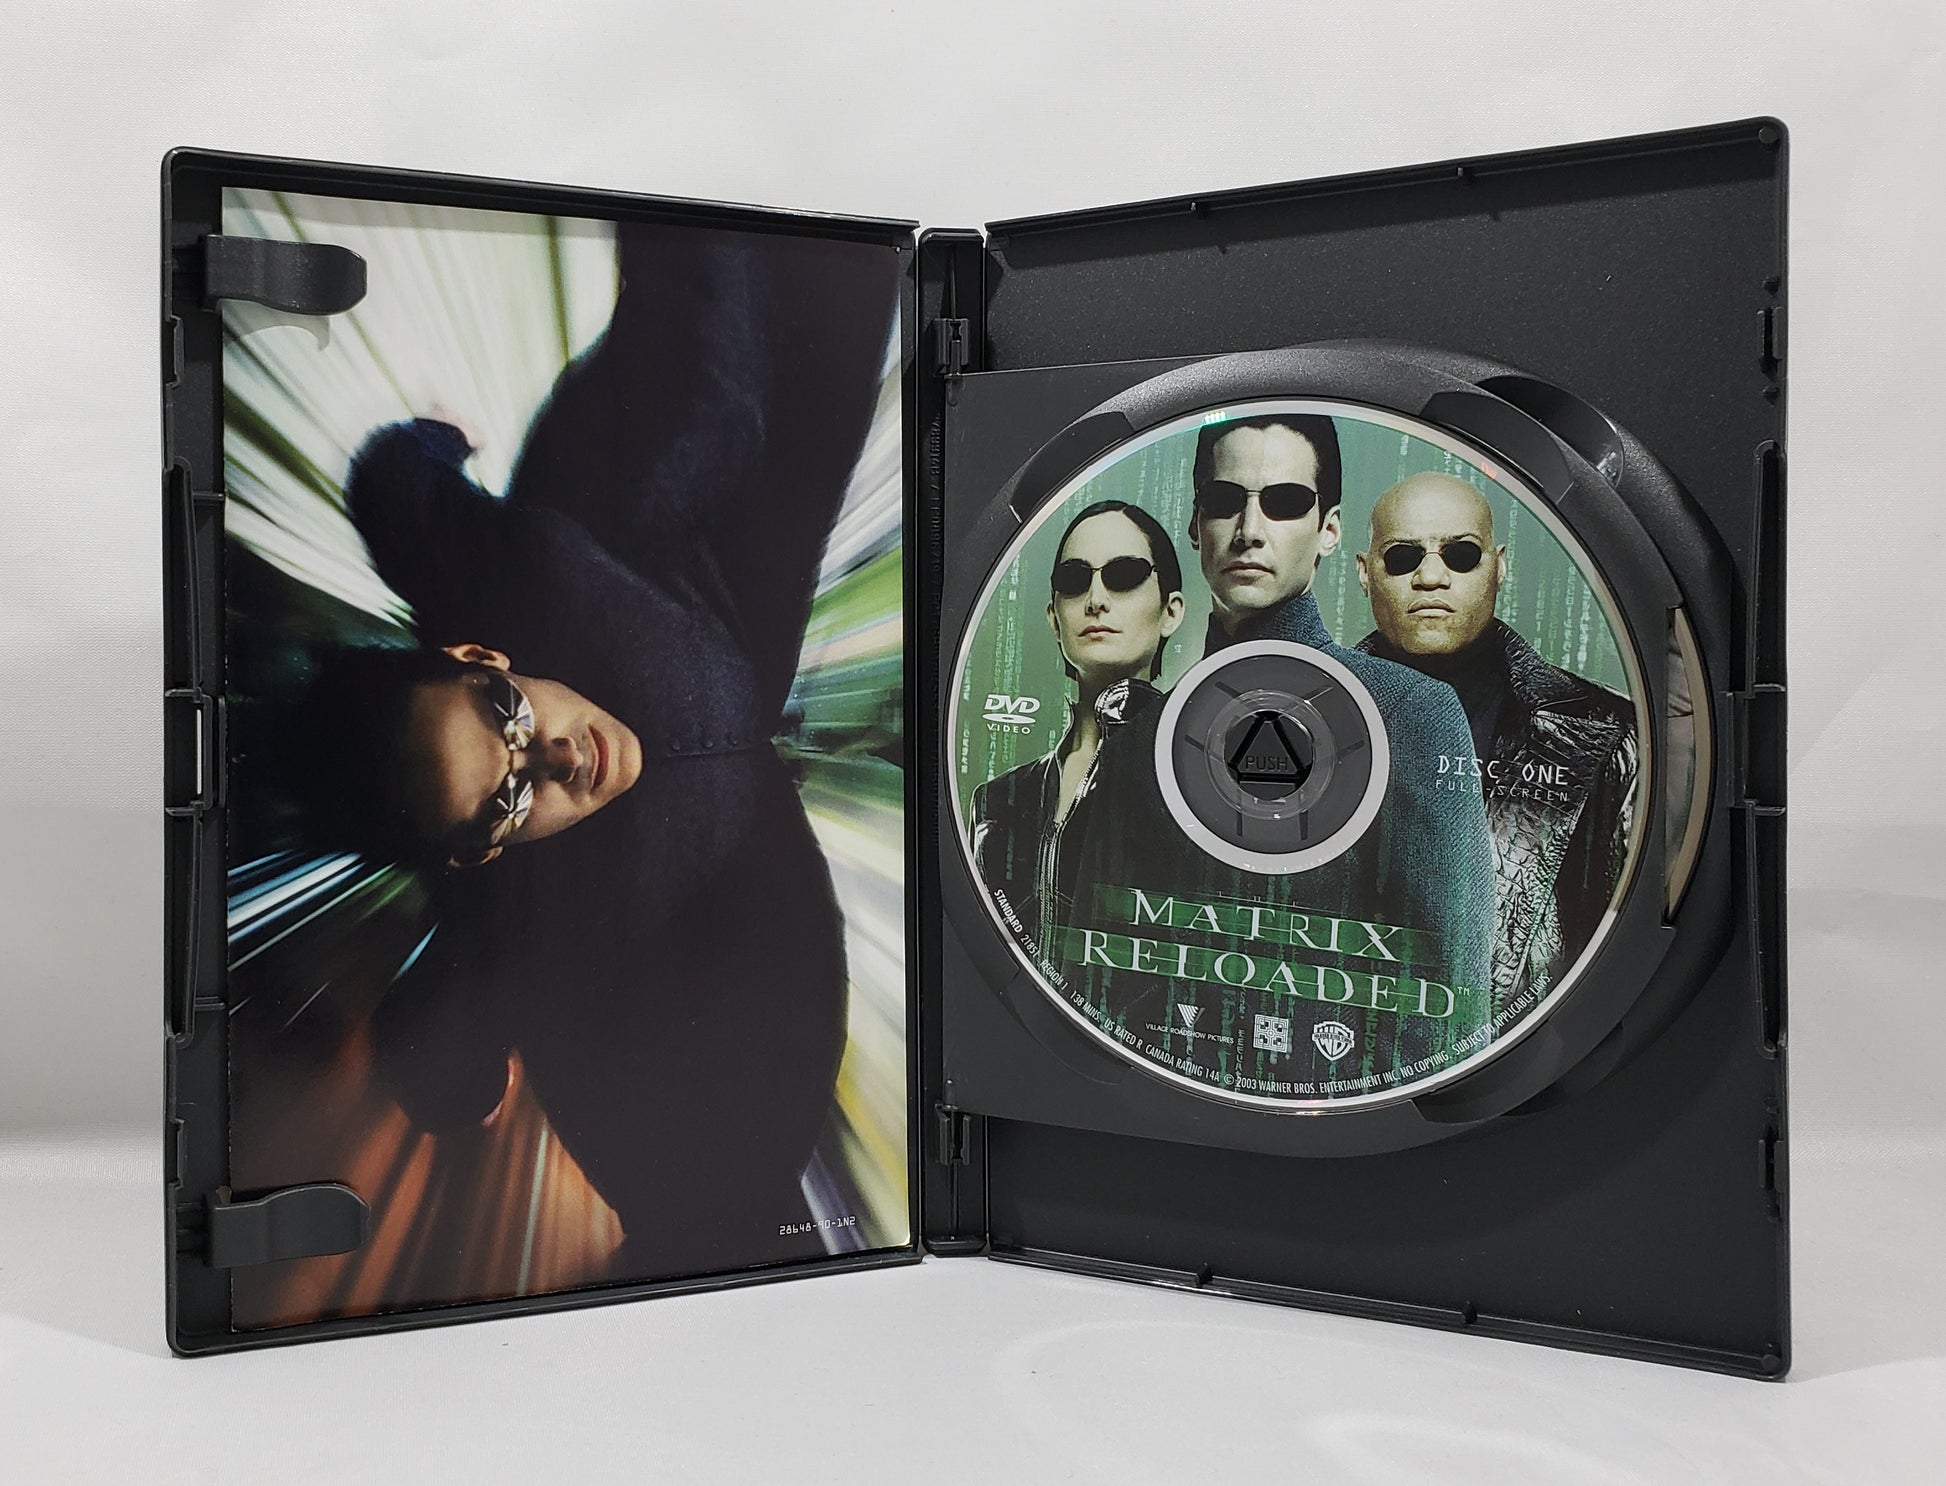 DVD: The Matrix Reloaded (2003, 2-Disc Set, Full-Screen)